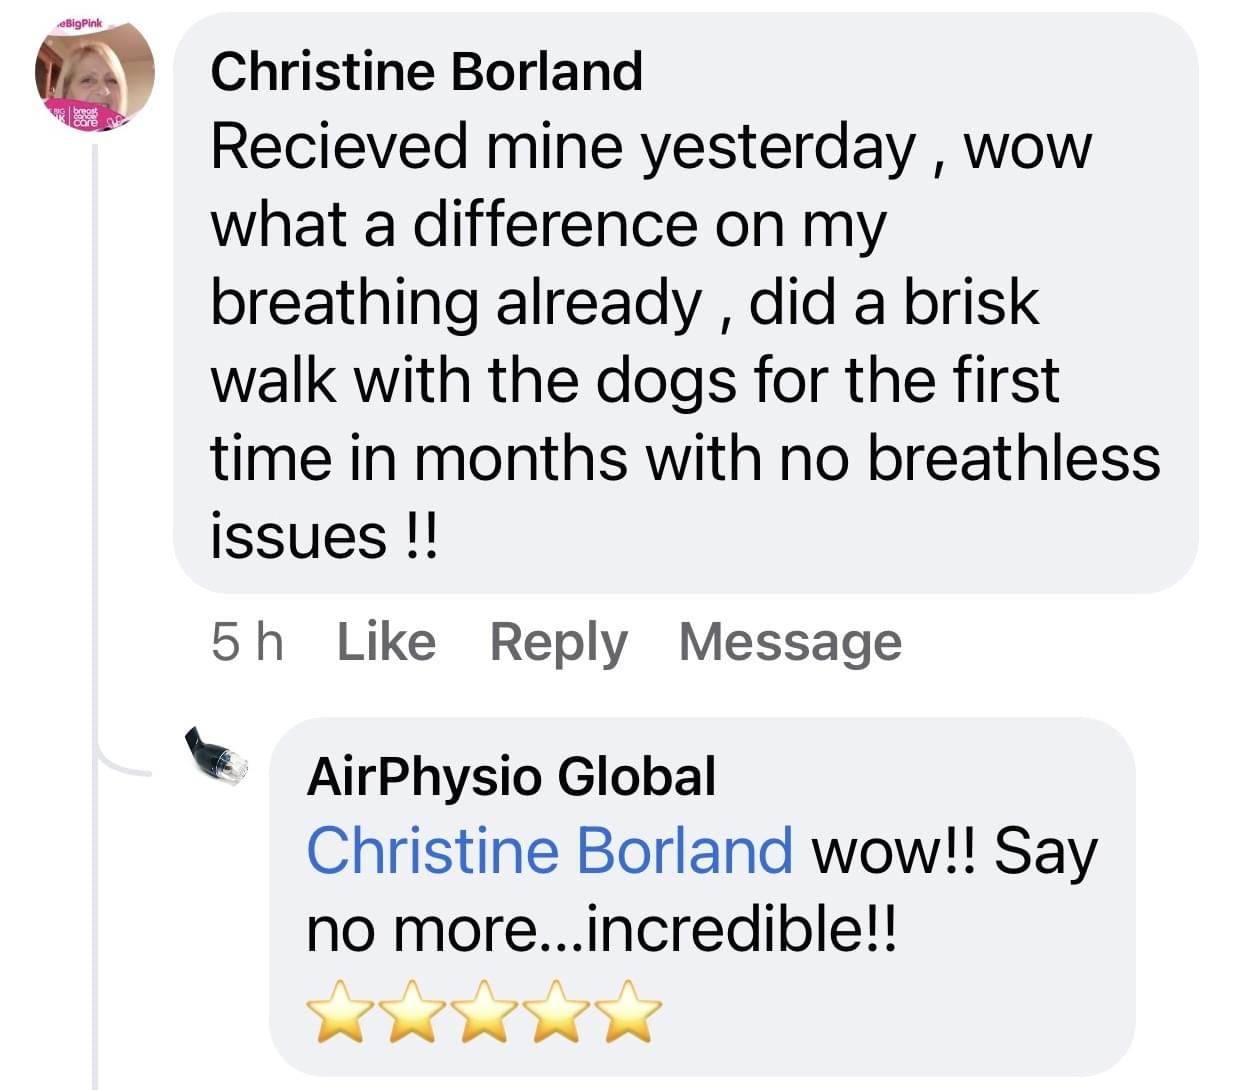 Christine-Borland-Received-Mine-Yesterday